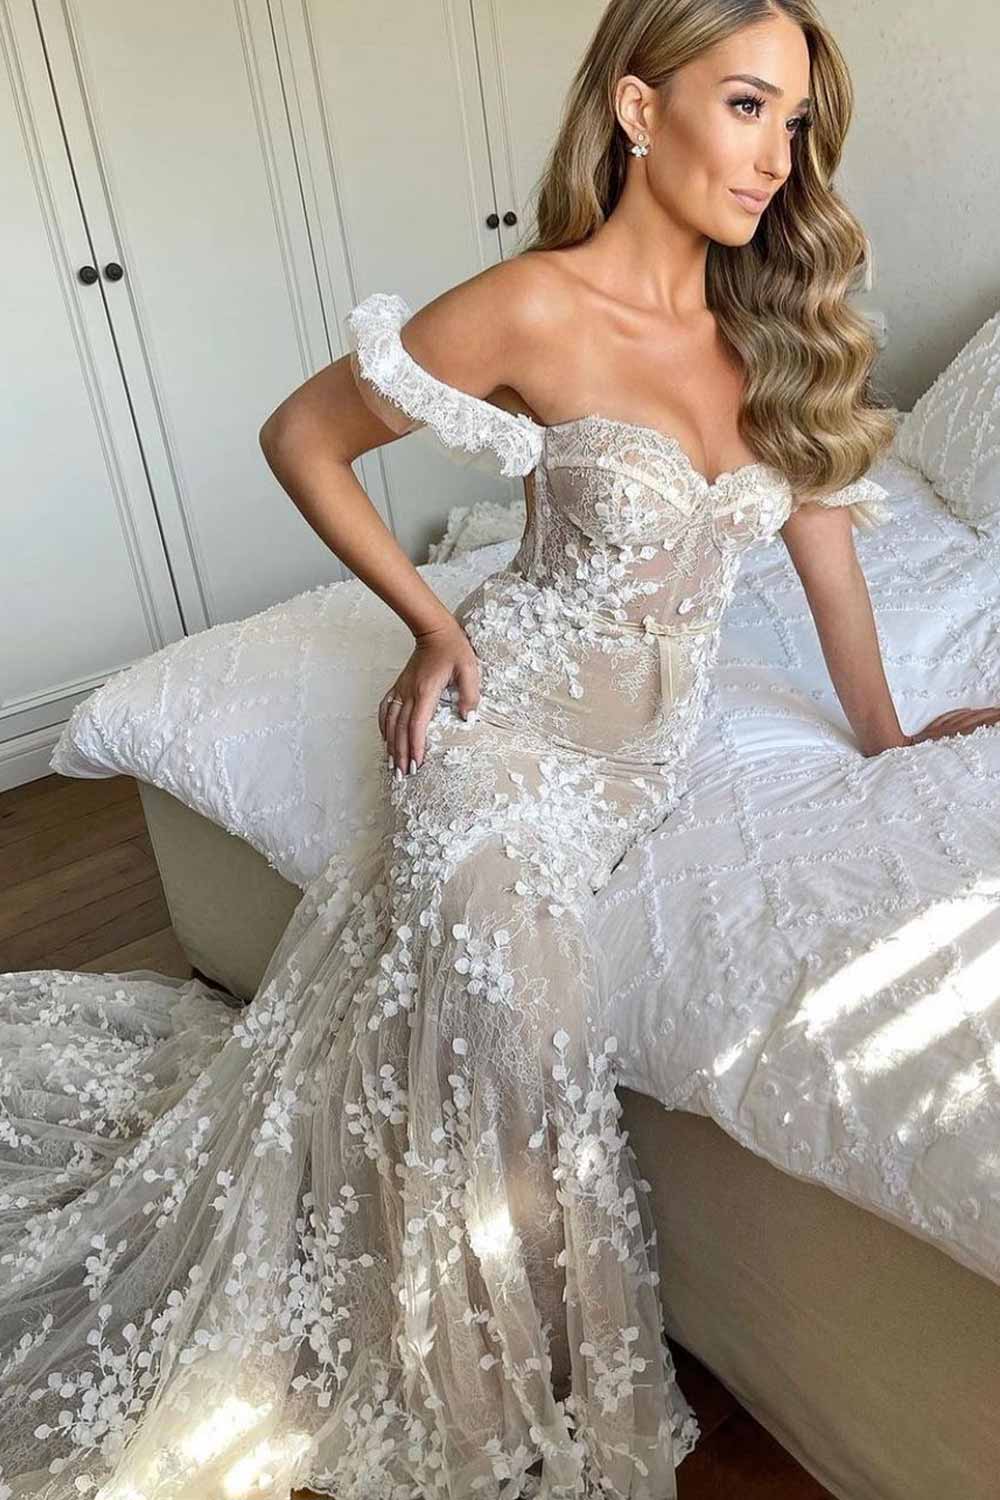 Mermaid Dress Design for Beach Wedding